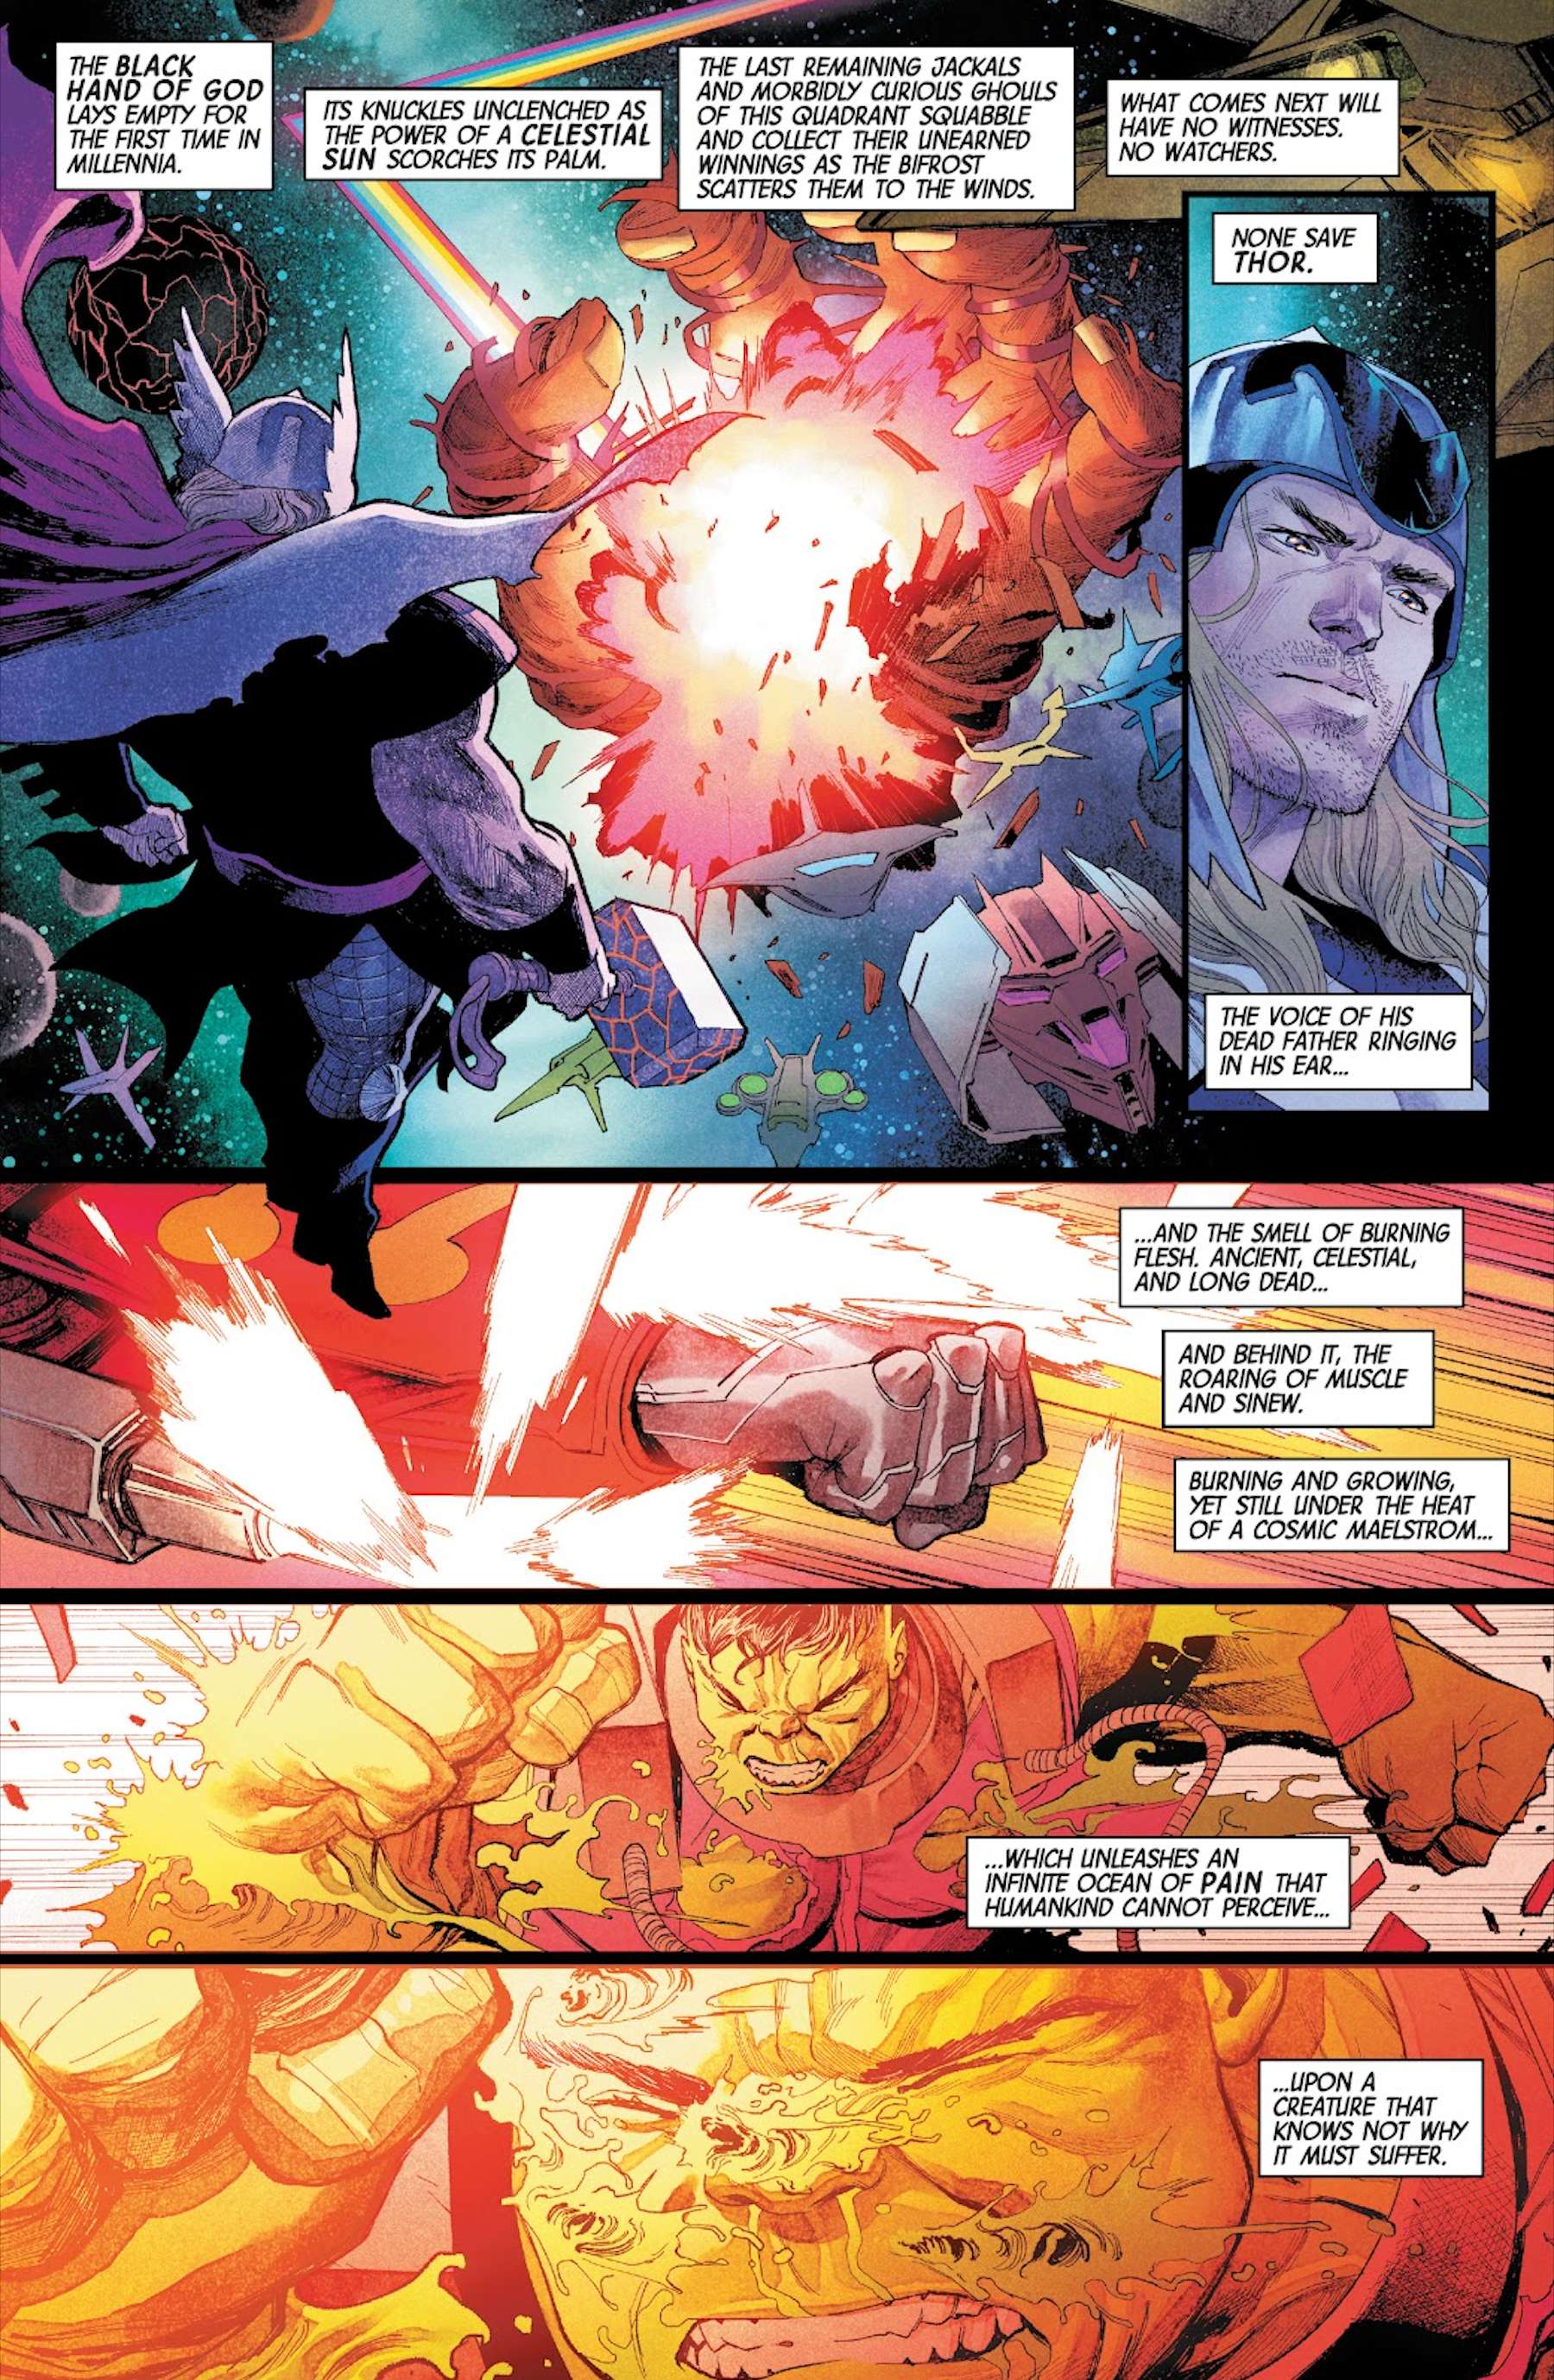 Thor vs Hulk in Banner of War